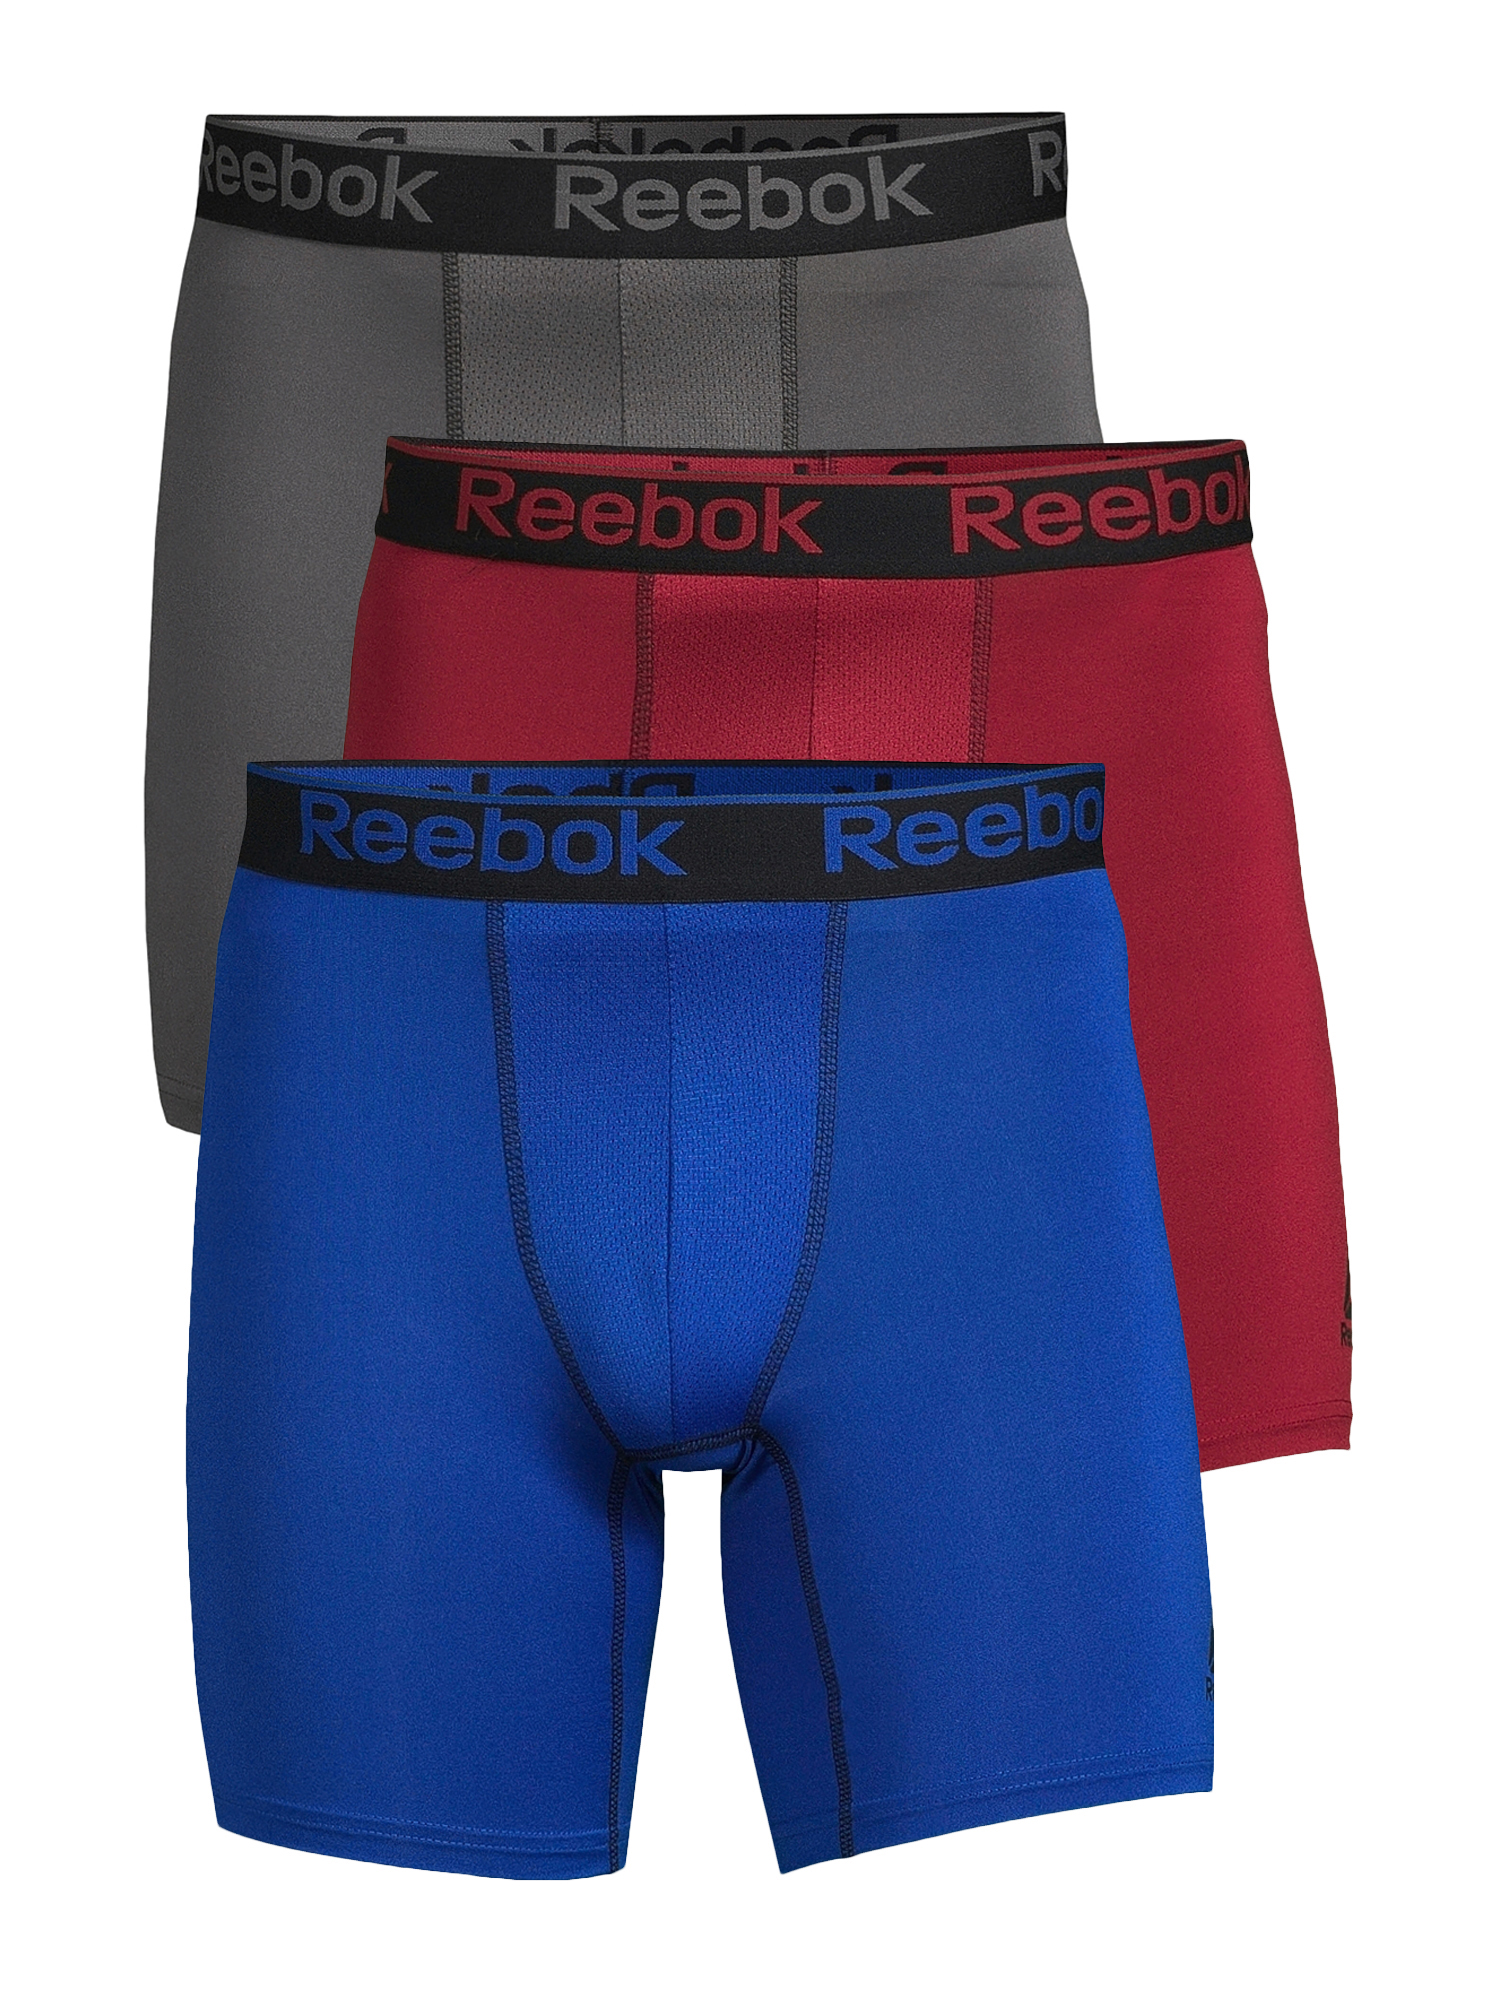 Reebok Men's Pro Series Performance Long Leg Boxer Brief, 7.5-Inch, 3-Pack - image 1 of 10